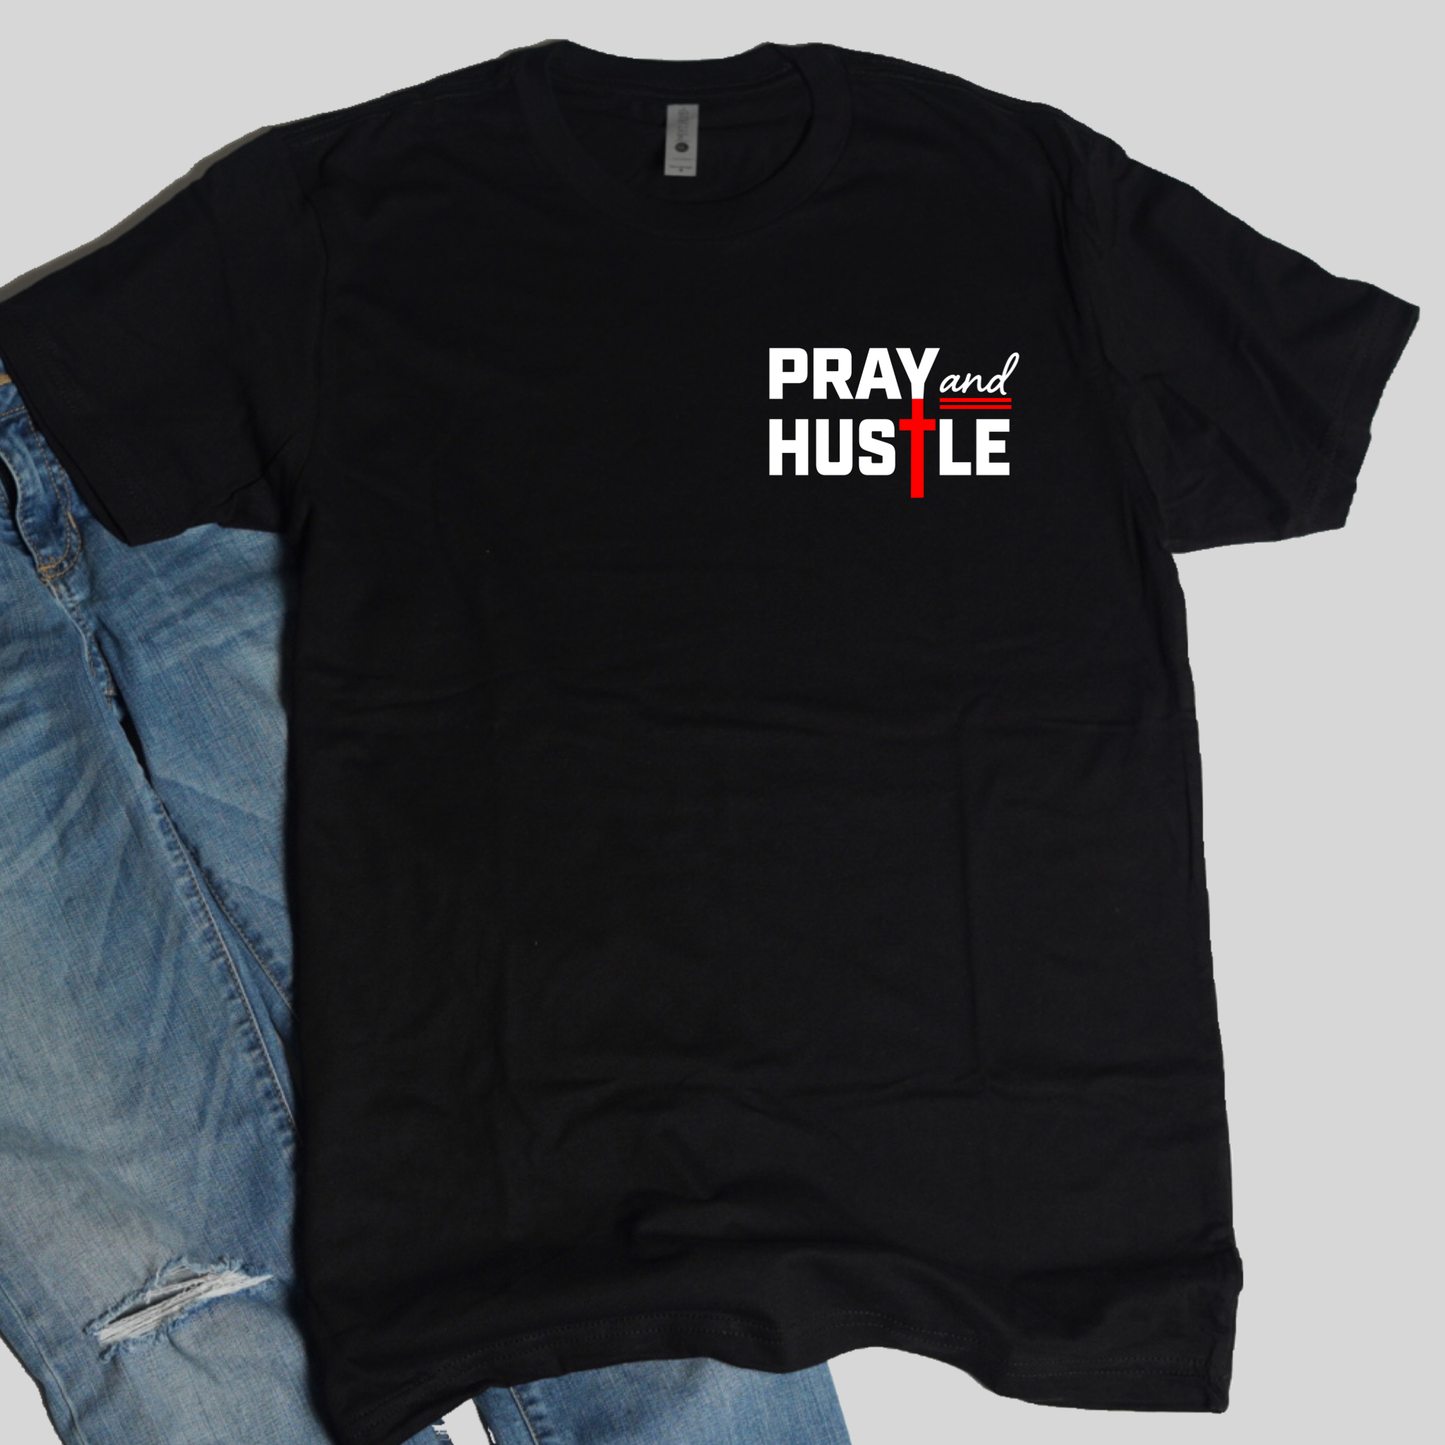 Pray and Hustle (Pocket Design) Tee